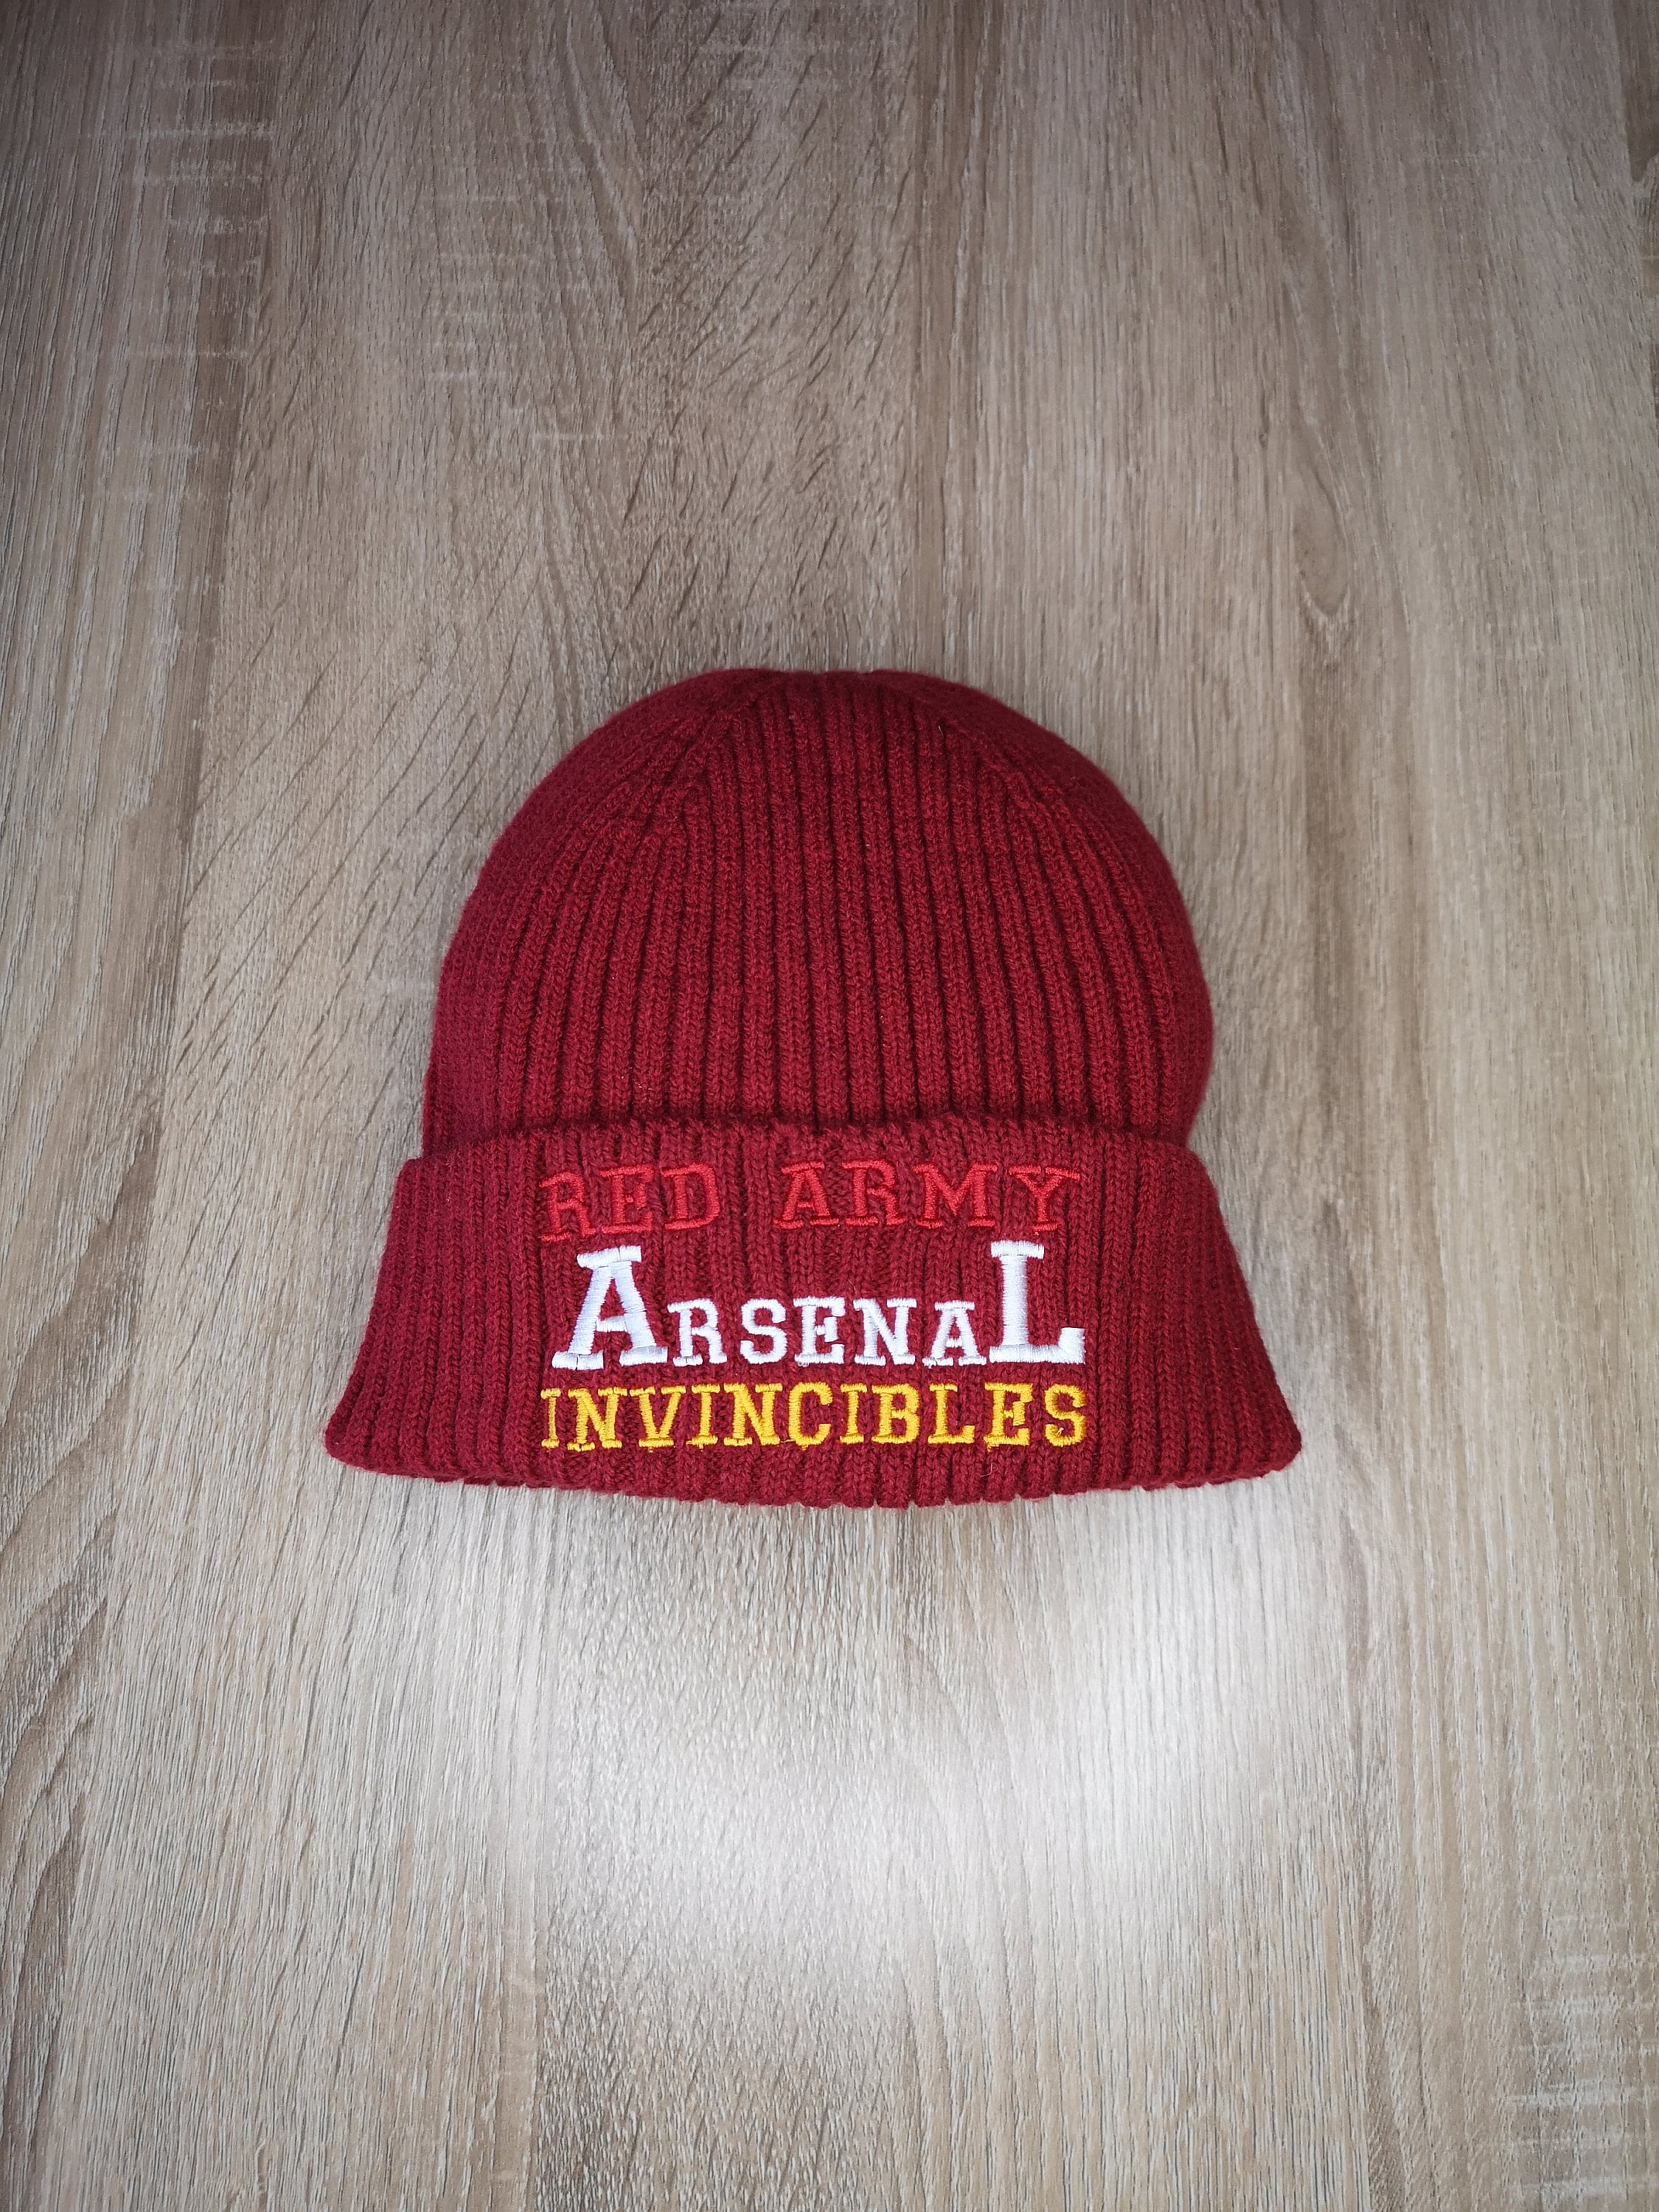 voldsom Syndicate Om Arsenal Fan Gift Arsenal FC Invincibles Hat Arsenal Fan Hat - Etsy